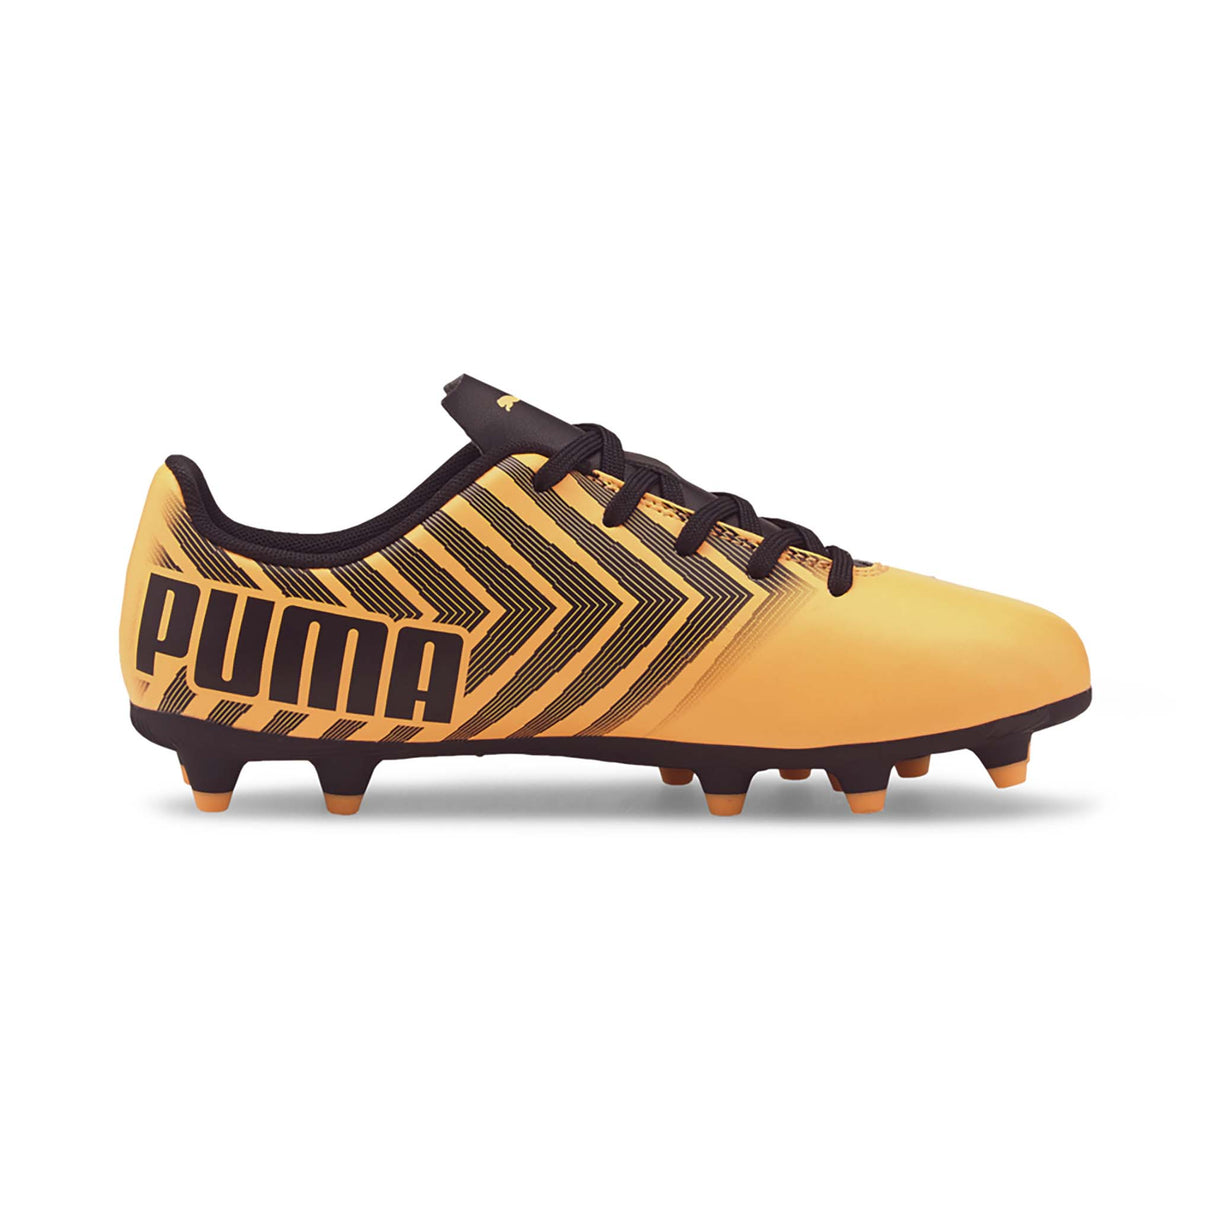 Puma Tacto II FG/AG Junior souliers soccer crampons orange noir enfant lateral